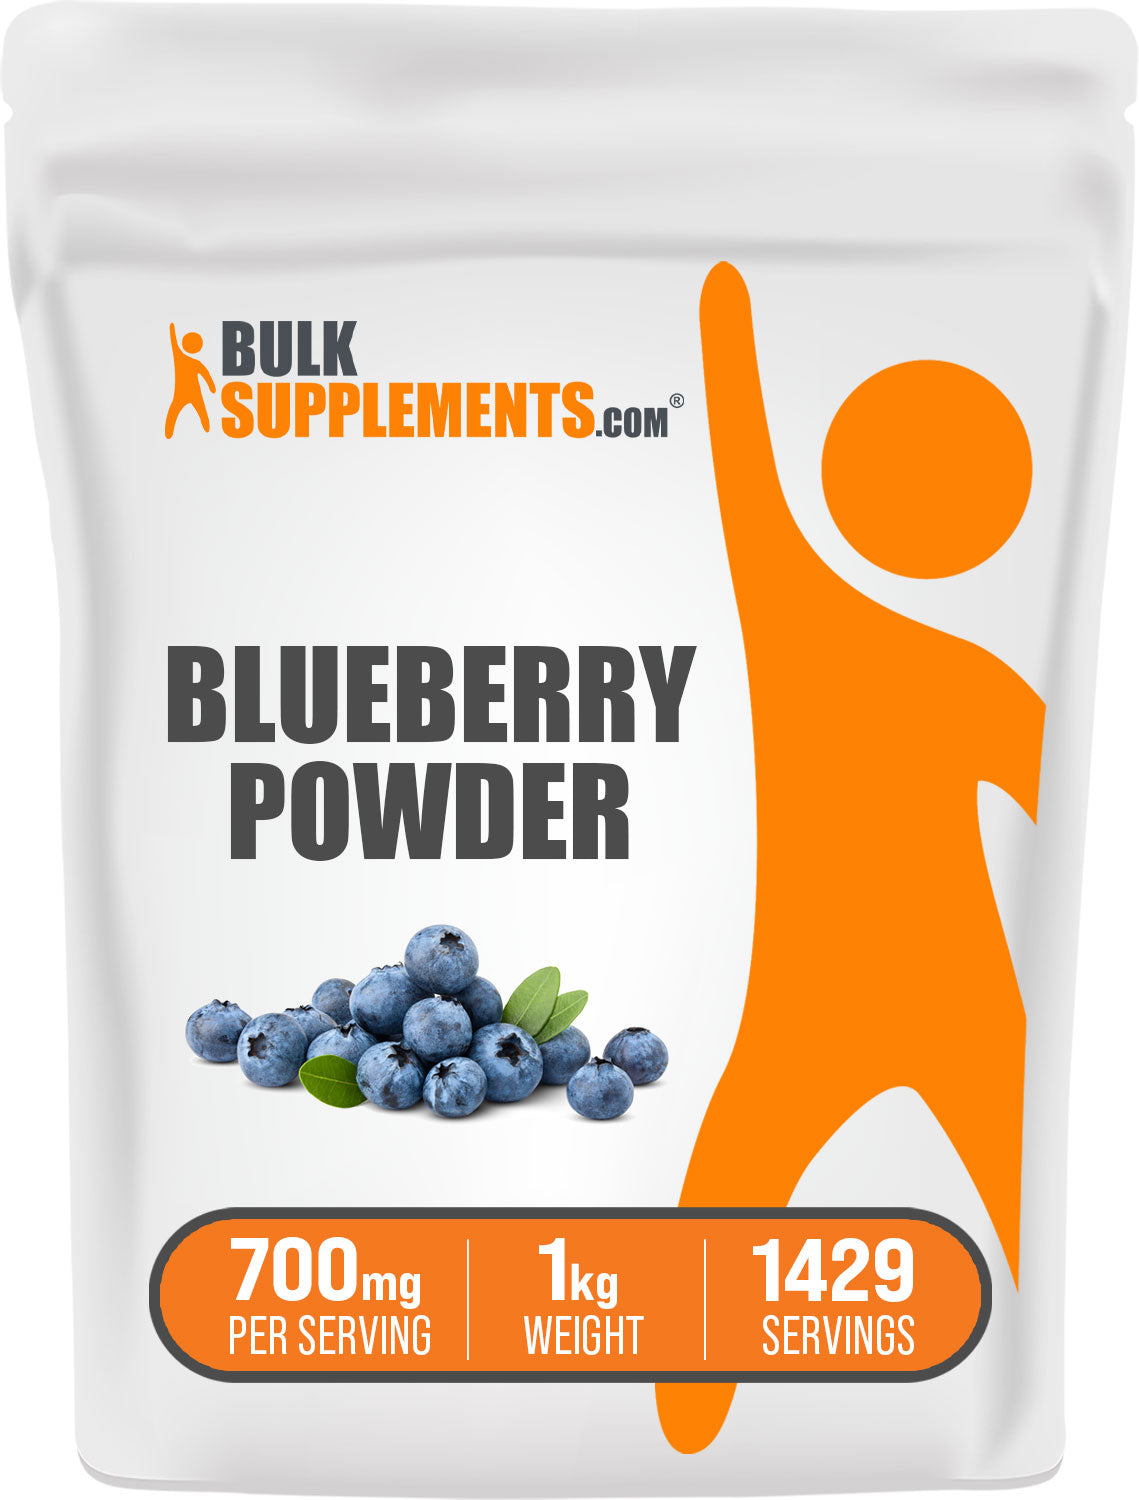 1kg of Blueberry Powder